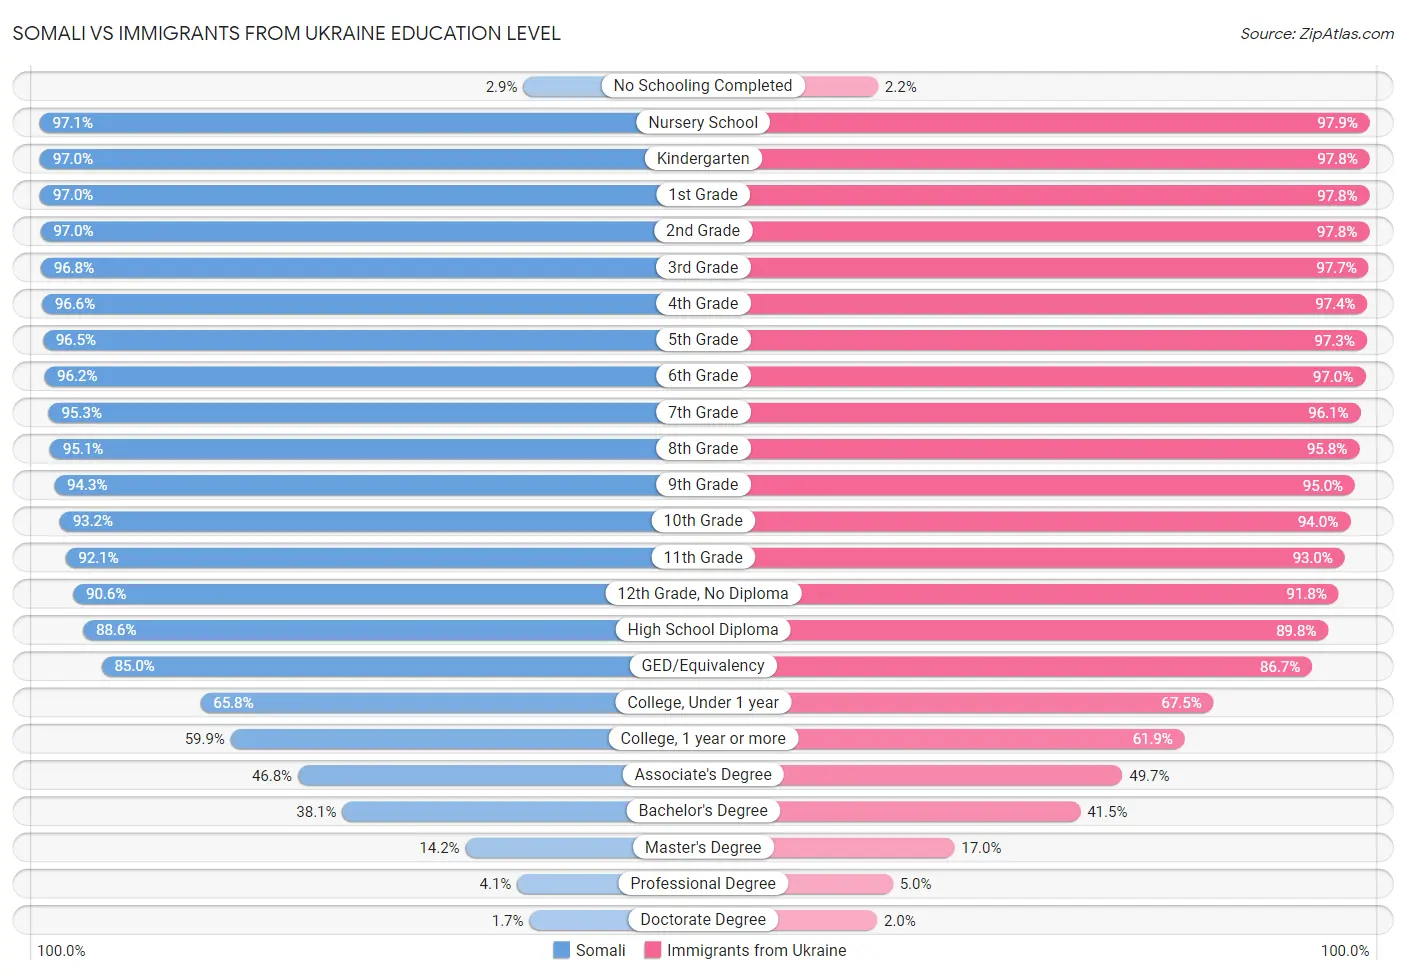 Somali vs Immigrants from Ukraine Education Level